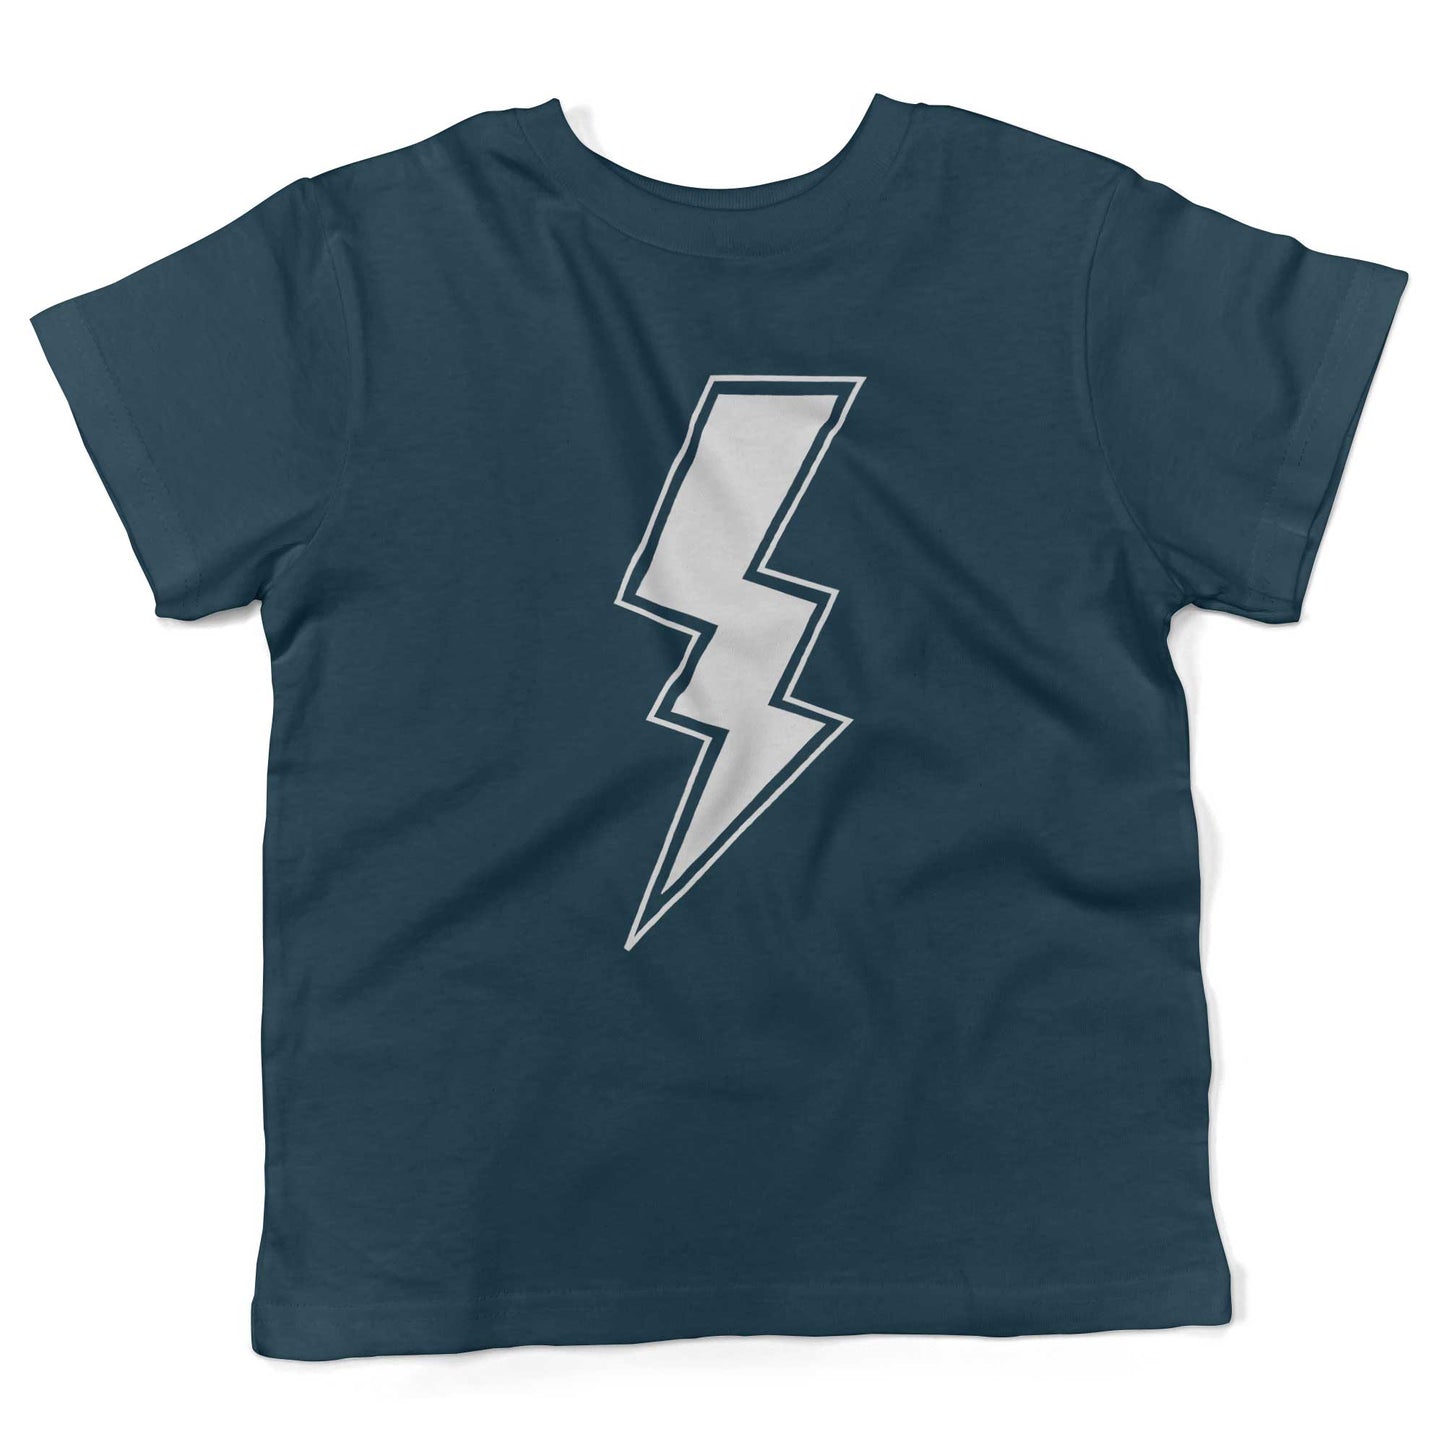 Giant Lightning Bolt Toddler Shirt-Organic Pacific Blue-2T